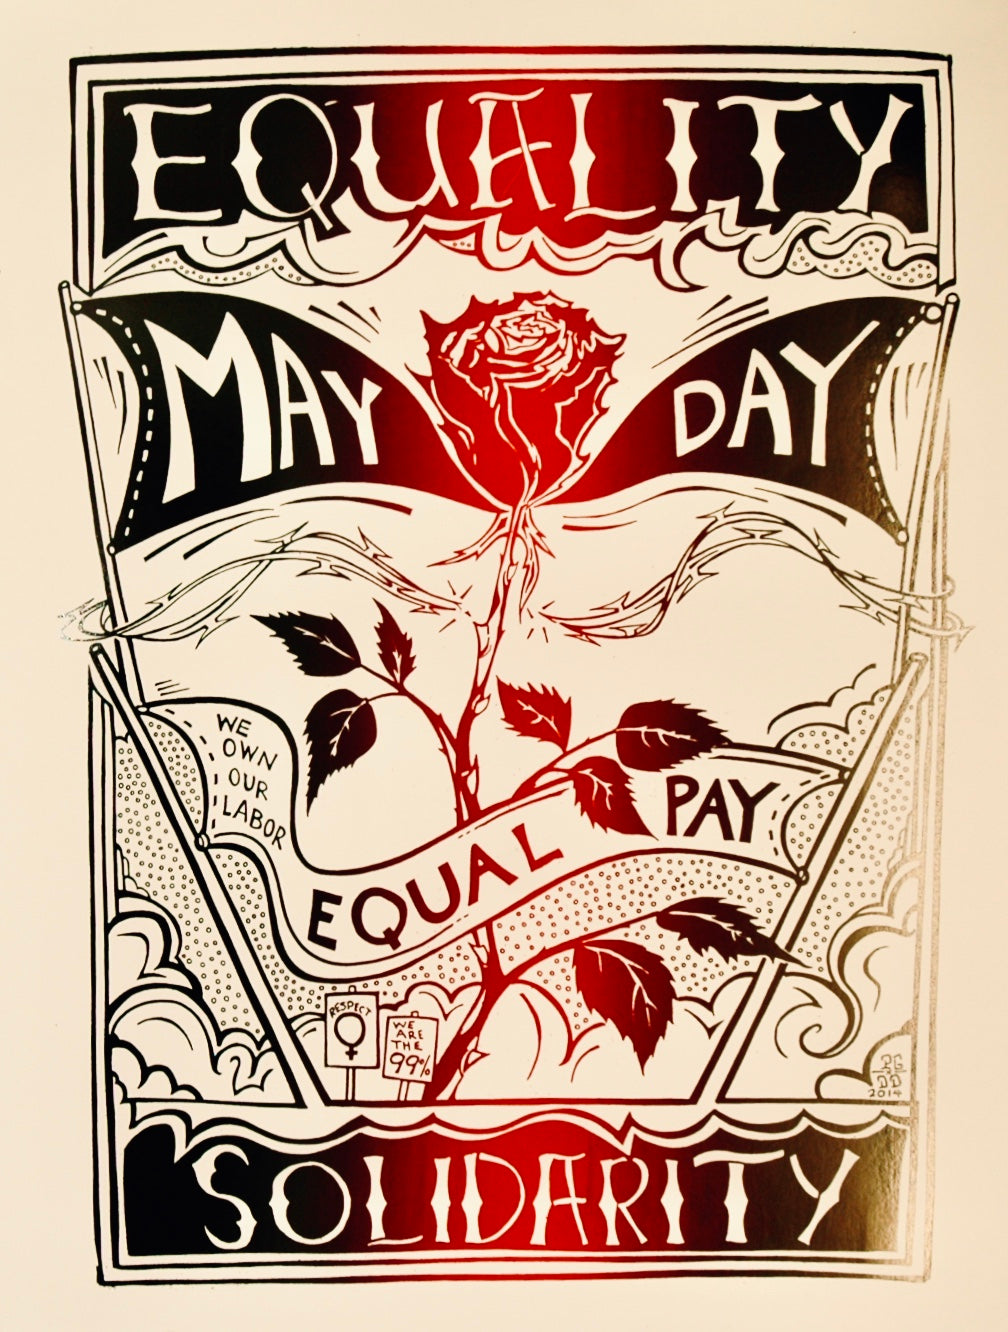 May Day, Equal Pay